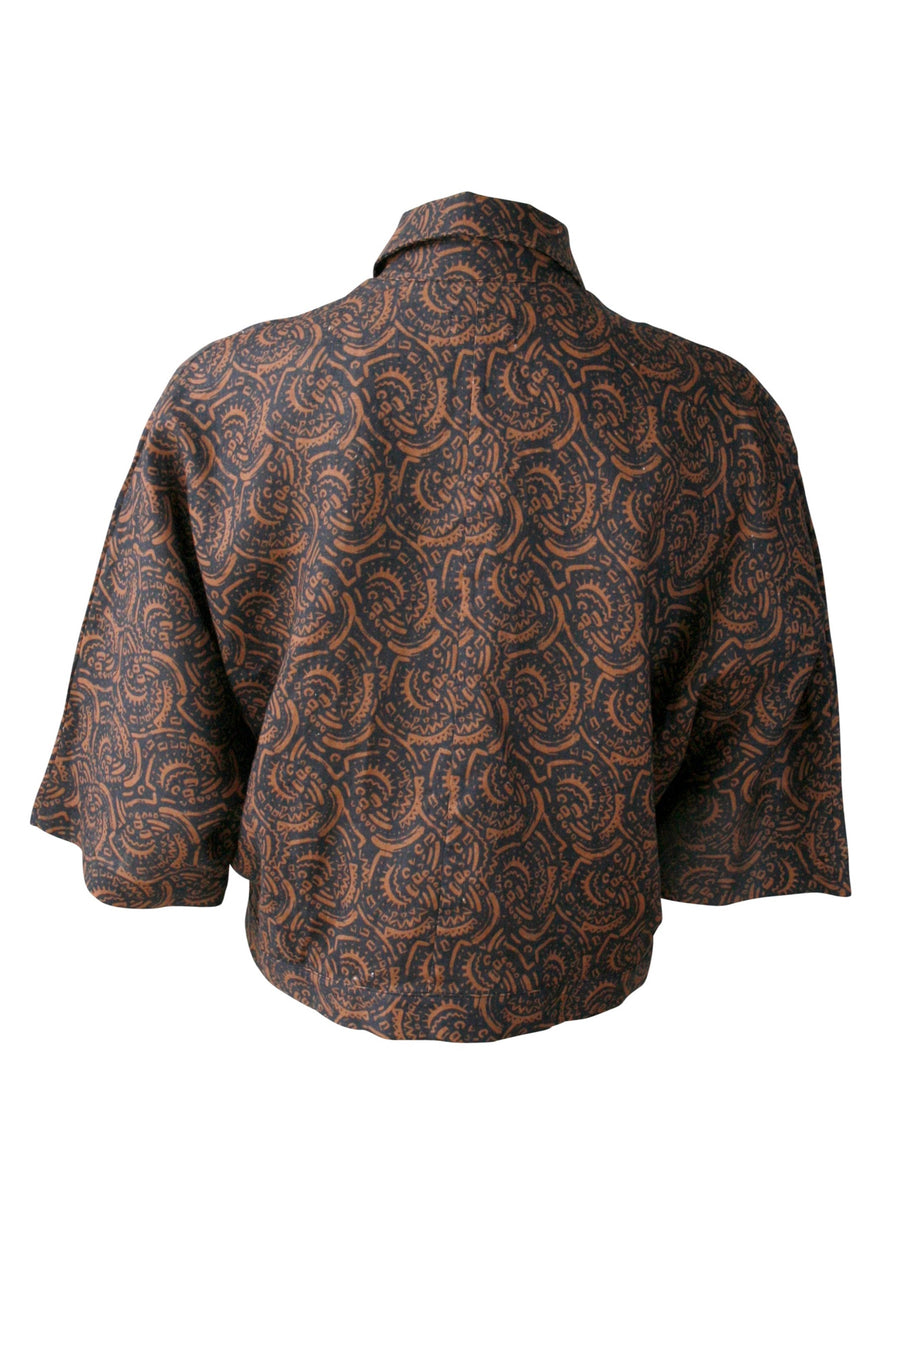 Kimono Sleeve Shirt - Tribal Tan Black